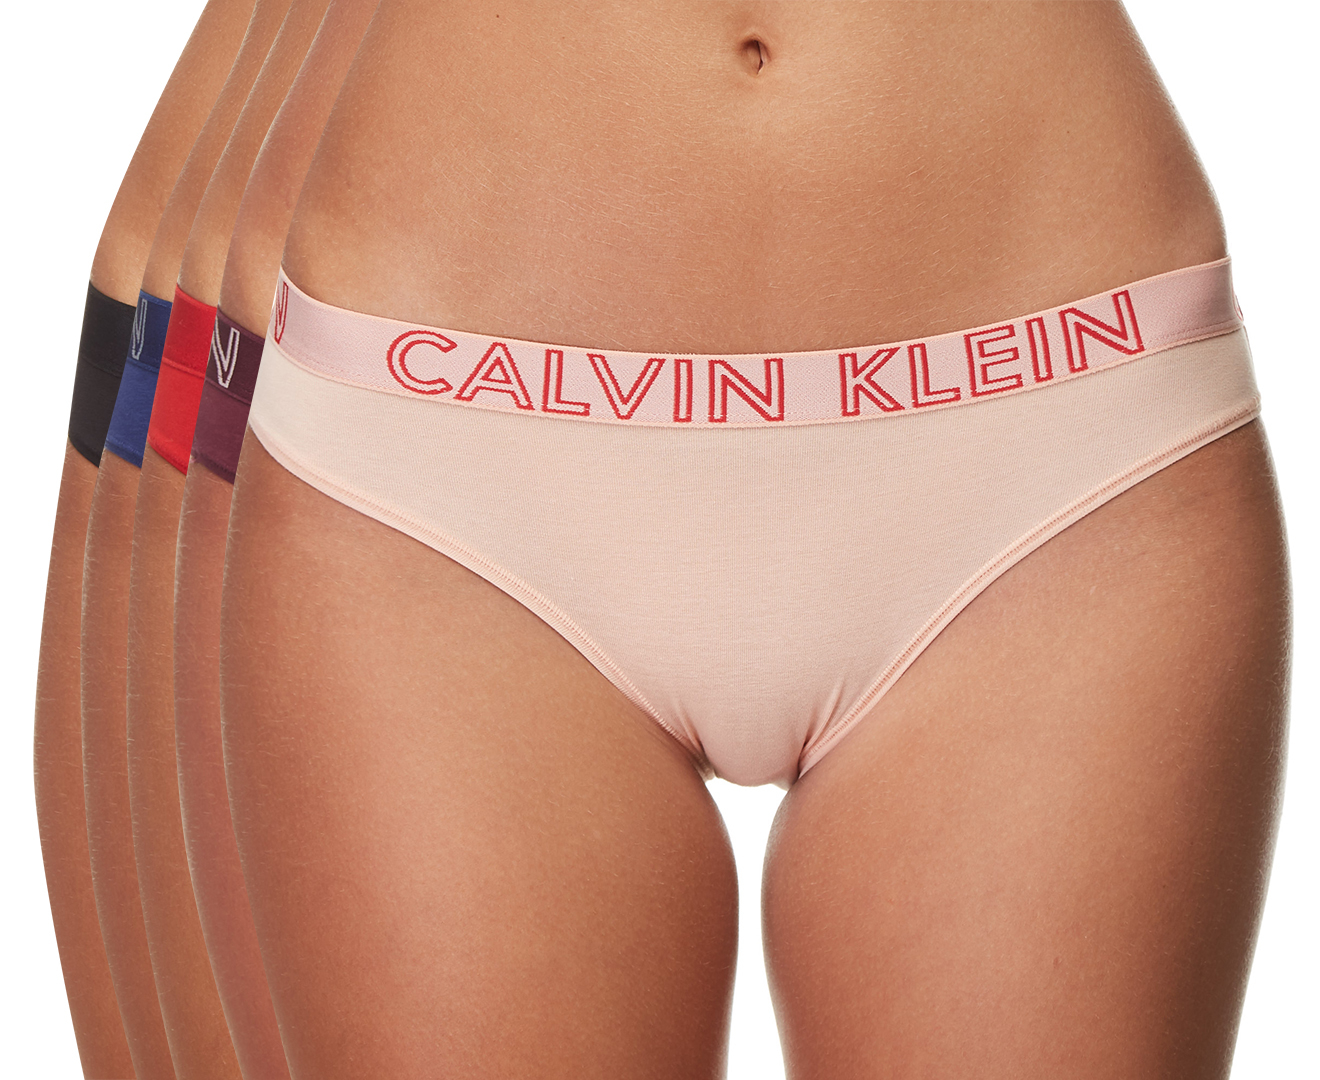 Calvin Klein Women's Motive Cotton Bikini Briefs 3-Pack - Black